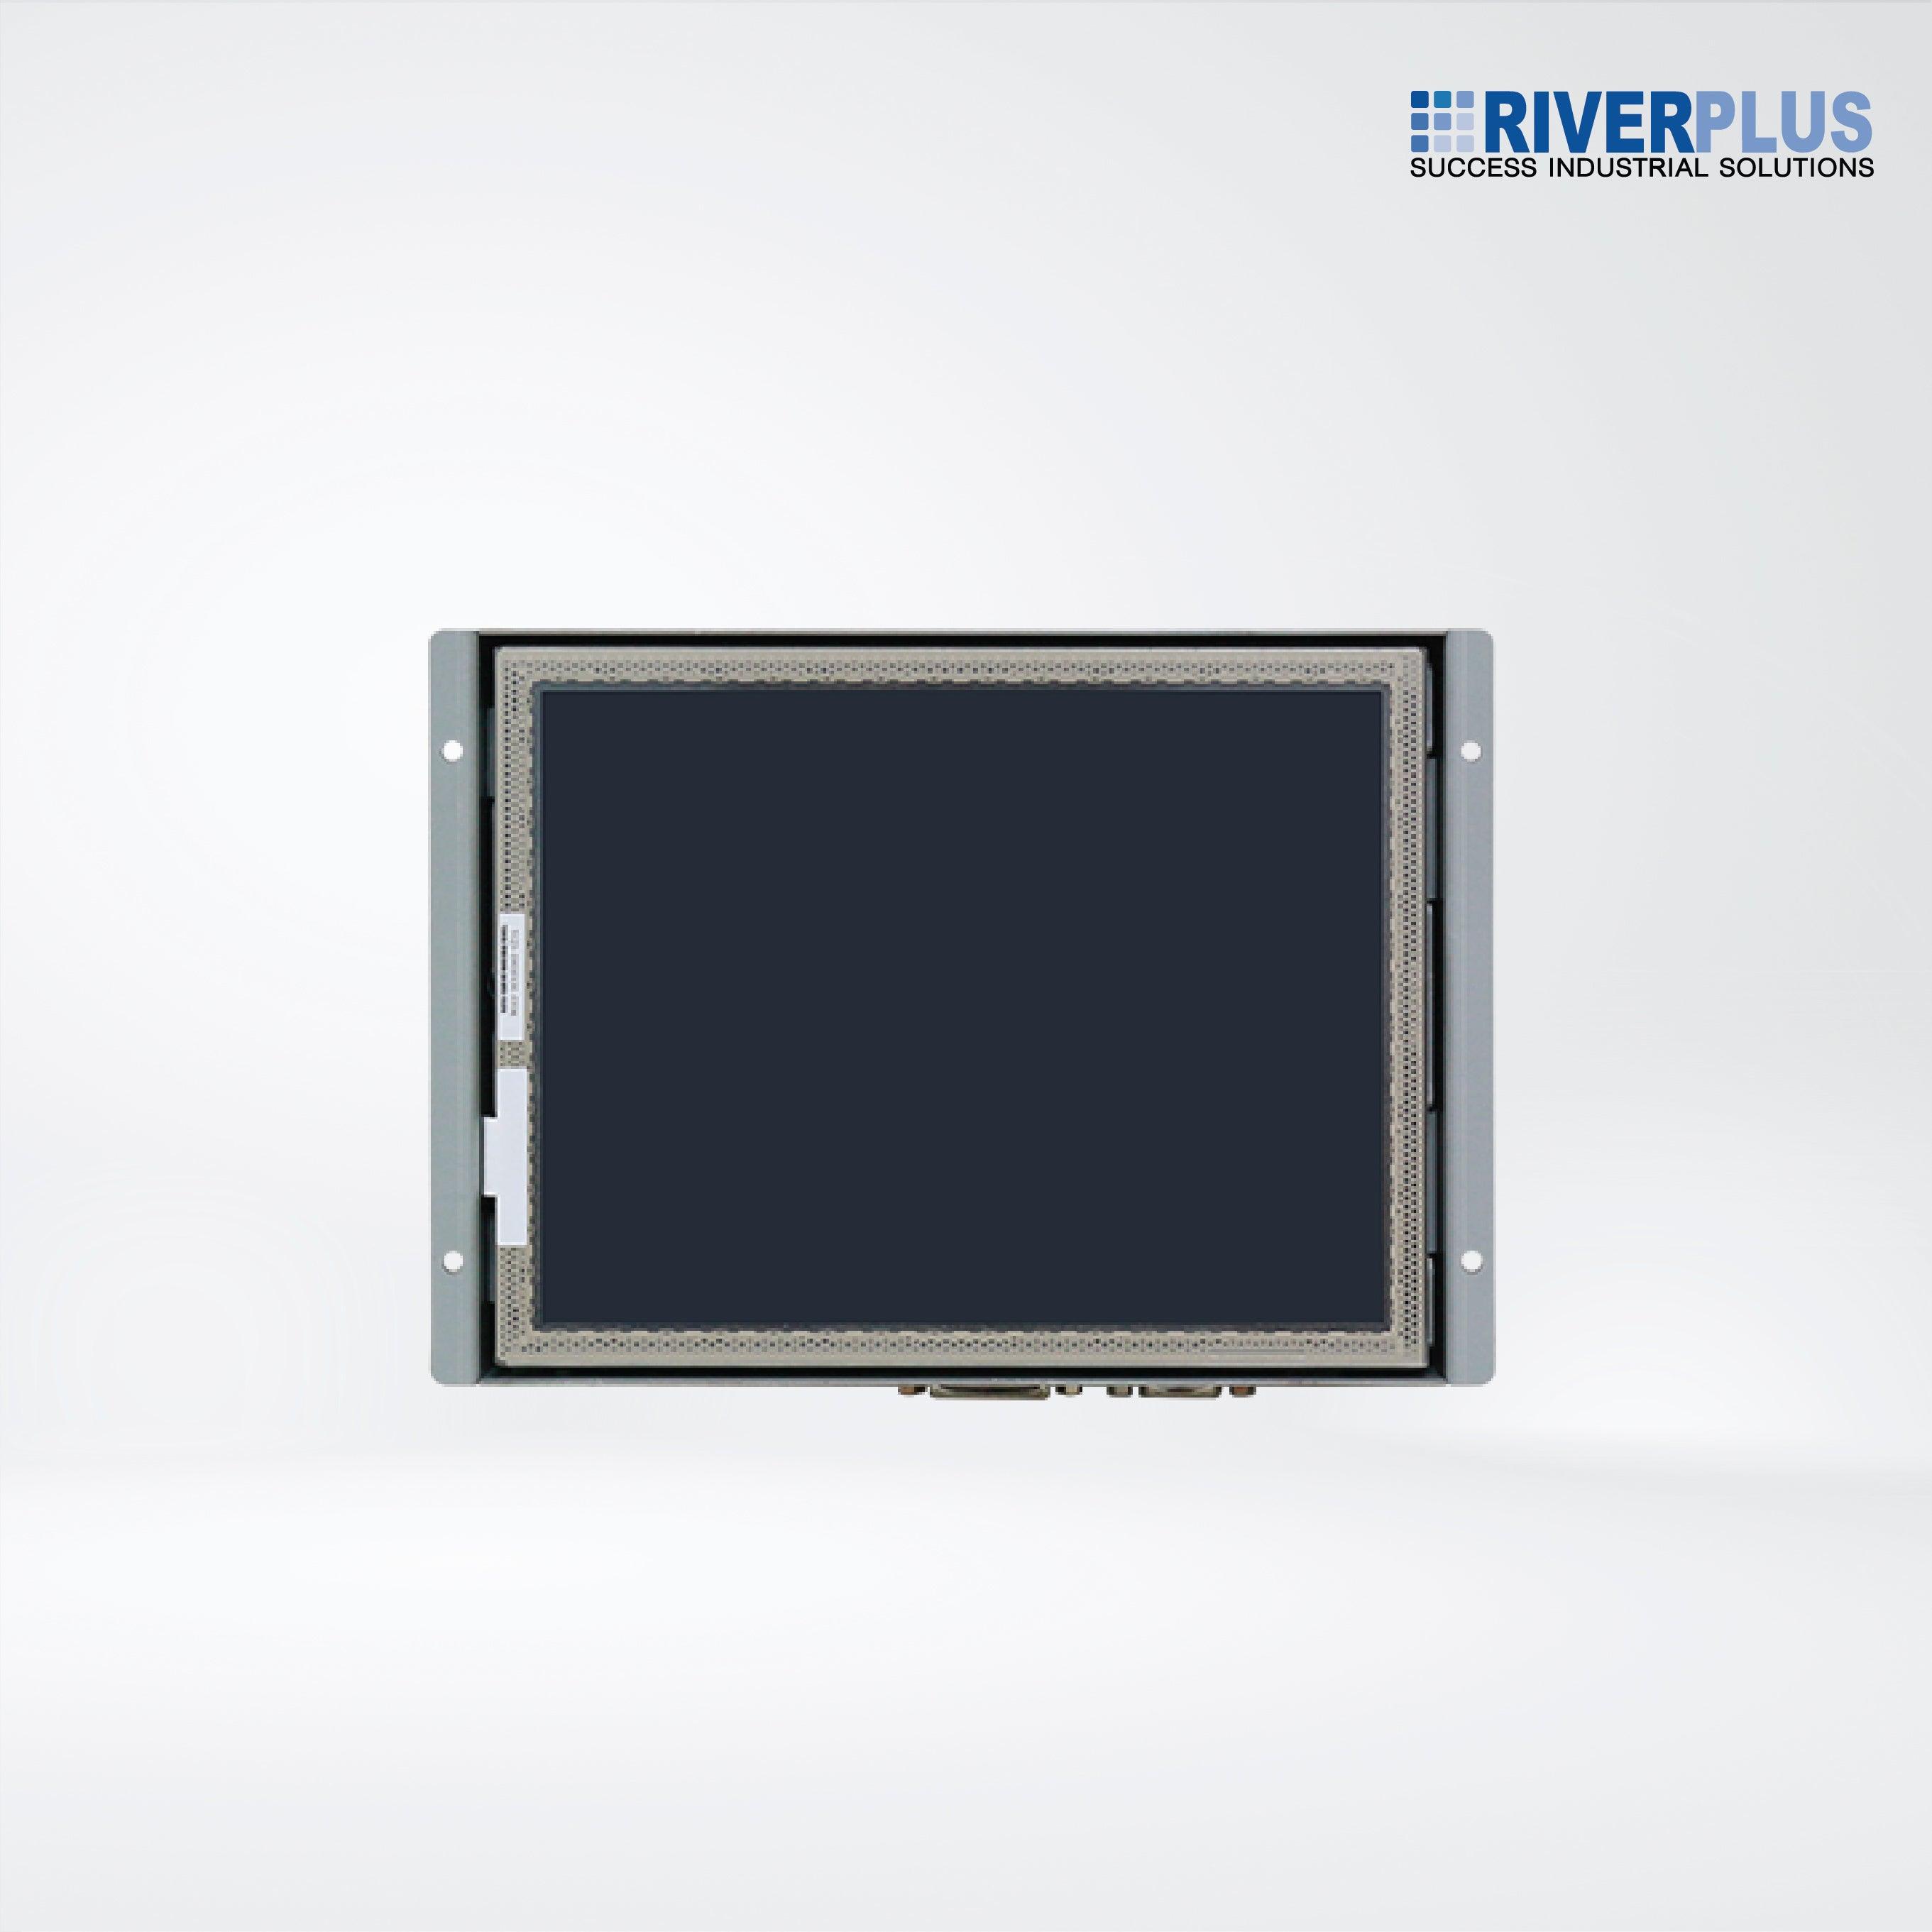 OPD-1086C 8" Open Frame Design Industrial Display - Riverplus